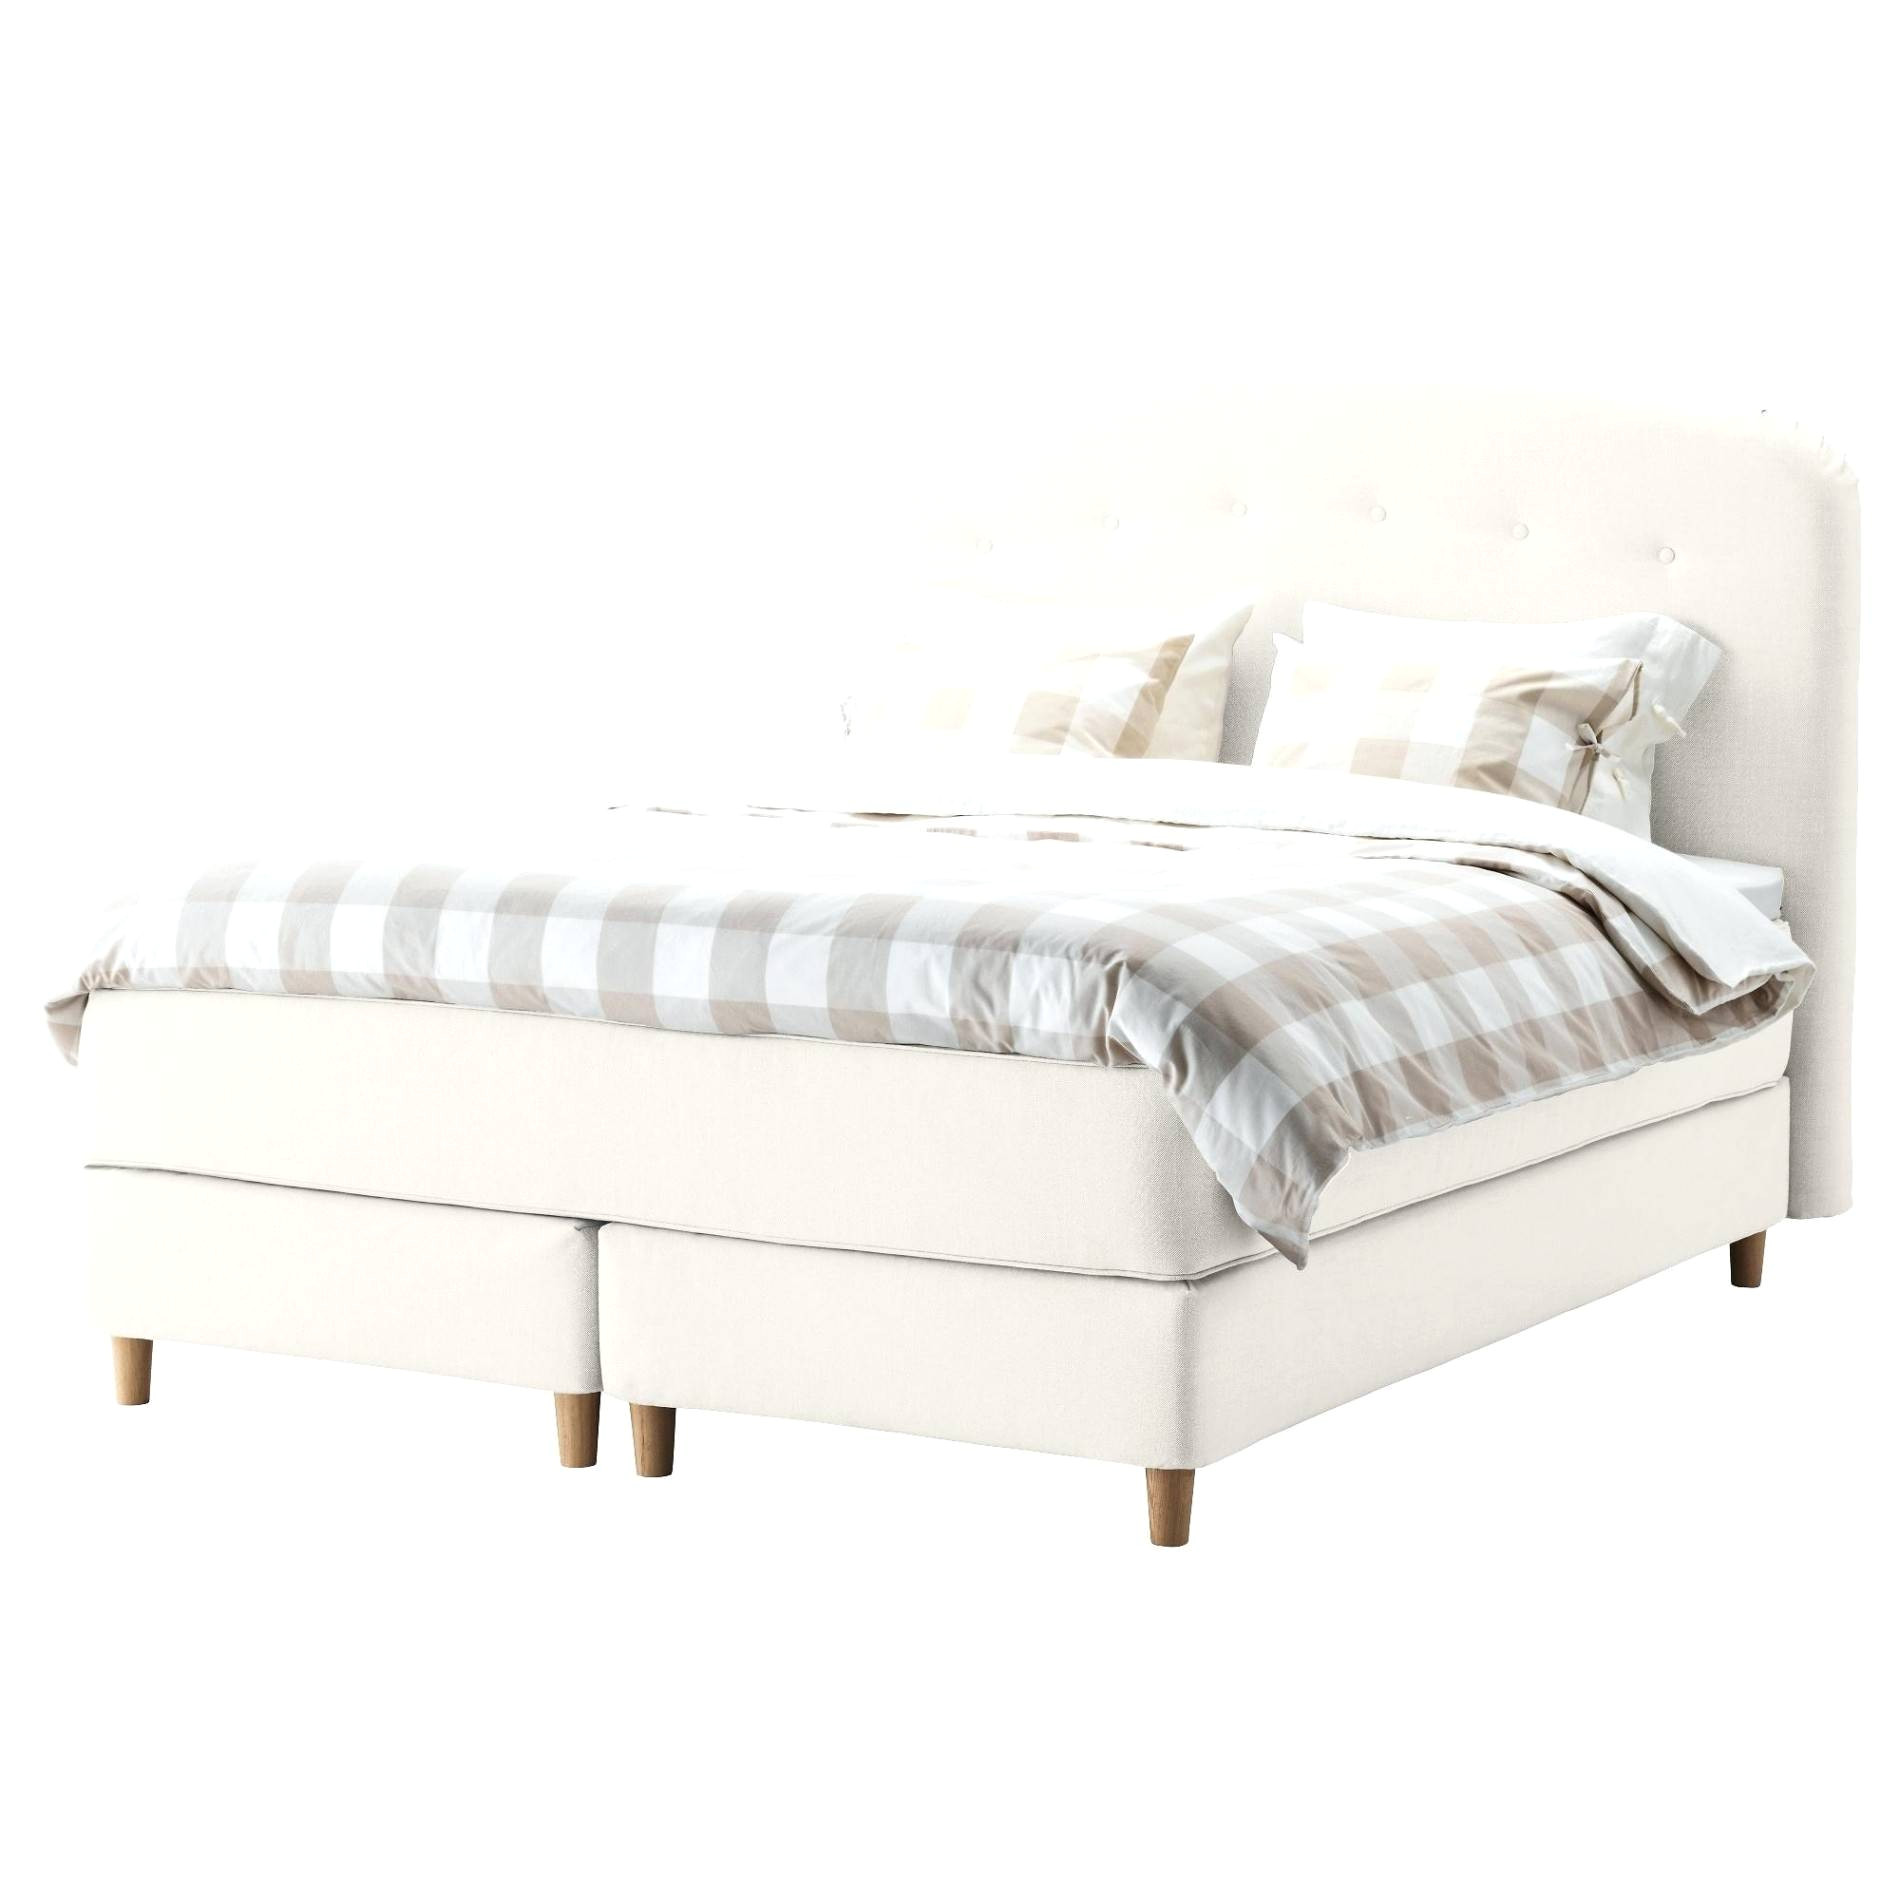 30 luxury ikea skorva bed instructions bedroom designs ideas